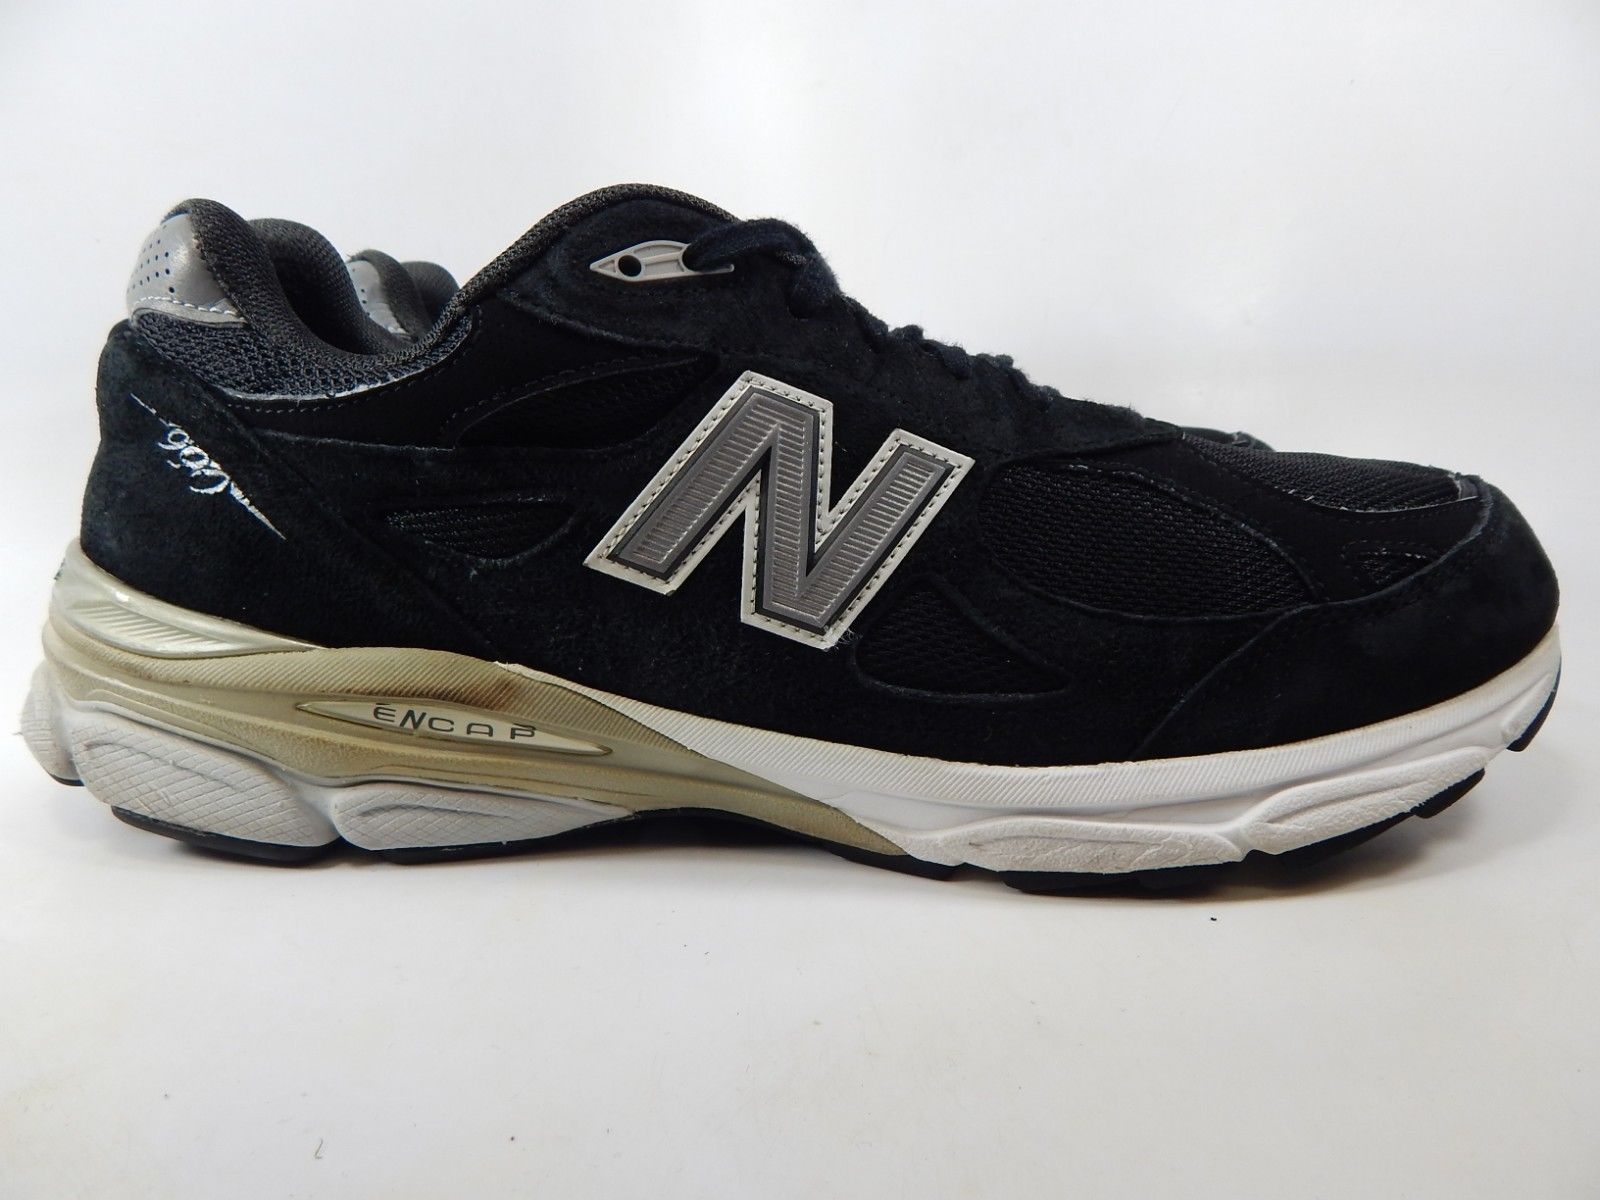 New Balance 990 v3 Size US 14 M (D) EU 49 Men's Running Shoes Black ...